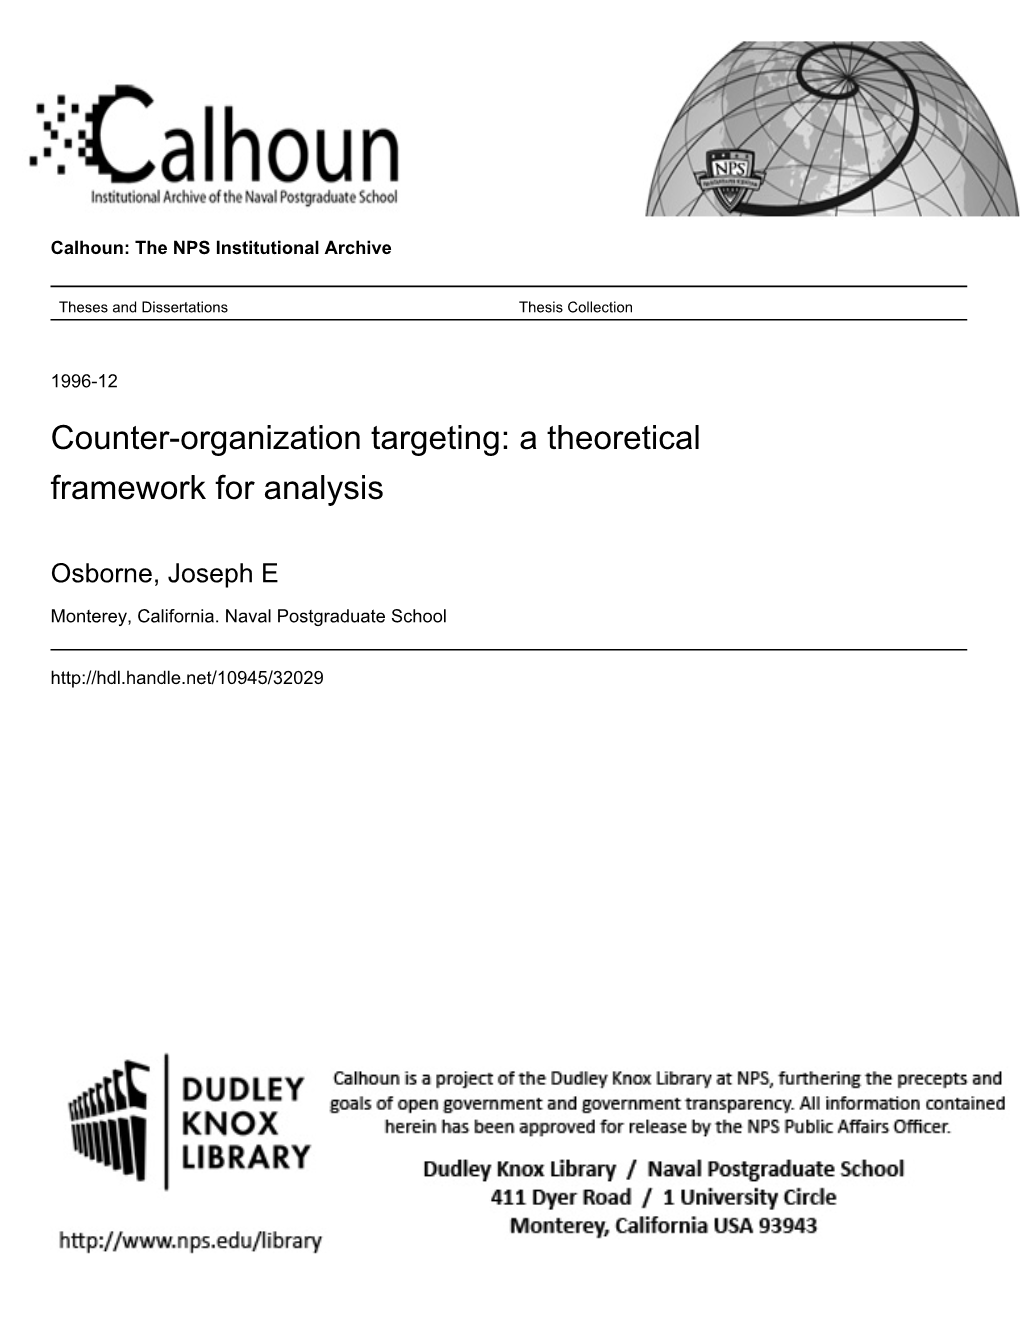 Counter-Organization Targeting: a Theoretical Framework for Analysis